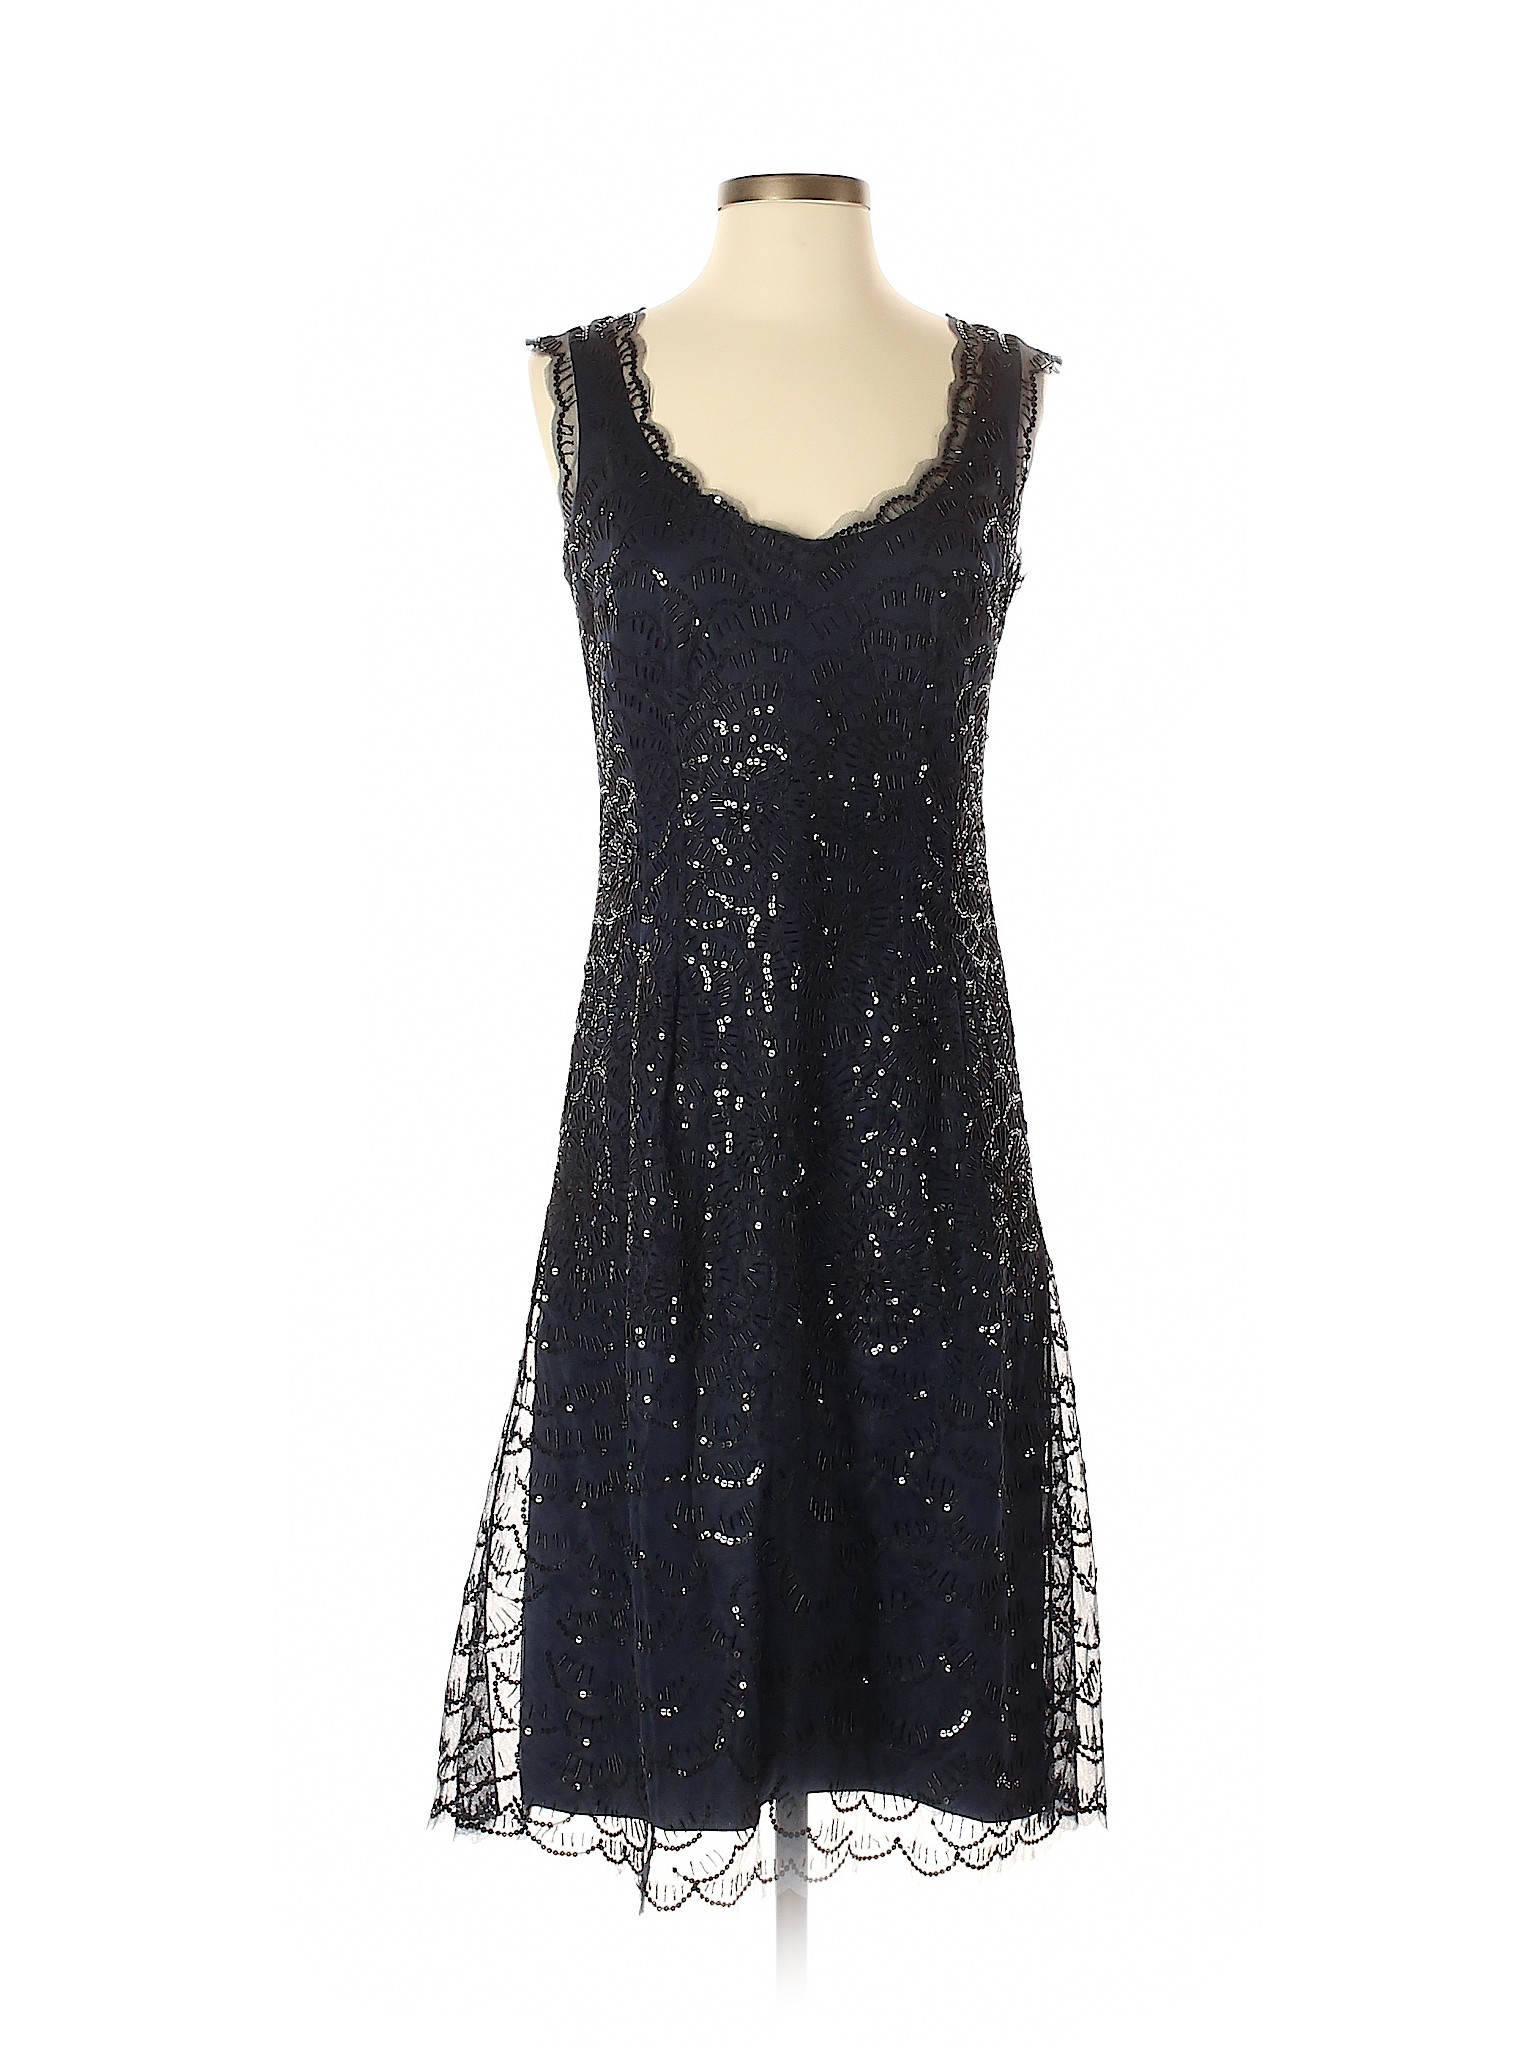 Carolina Herrera 100% Silk Solid Blue Cocktail Dress Size 4 - 93% off ...